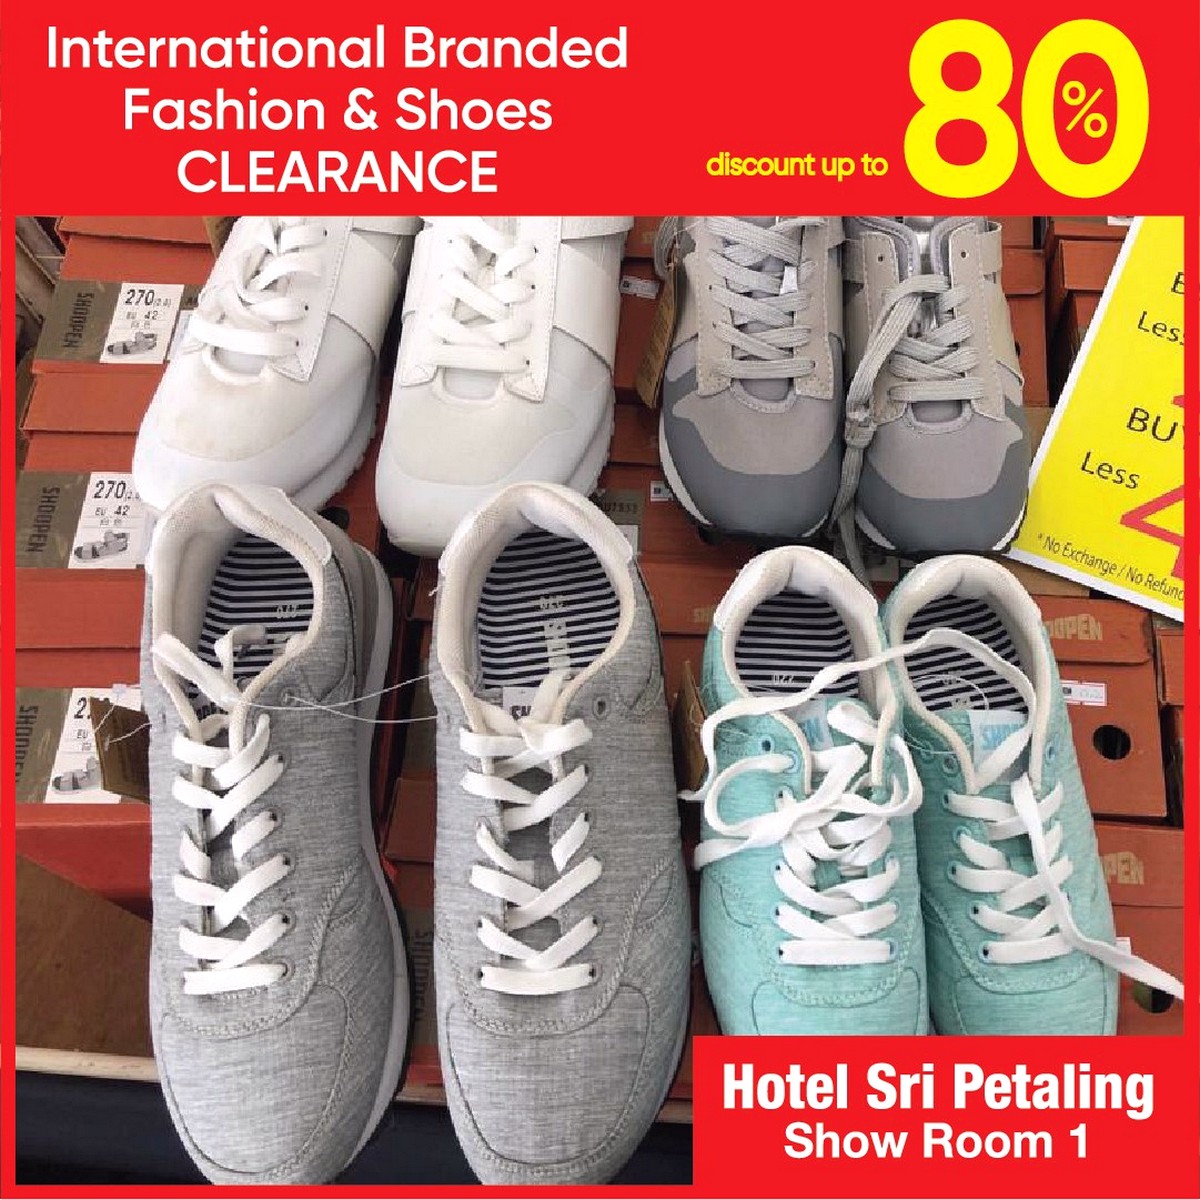 Hotel-Sri-Petaling-Warehouse-Sale-2021-16 - Apparels Fashion Accessories Fashion Lifestyle & Department Store Kuala Lumpur Selangor Warehouse Sale & Clearance in Malaysia 